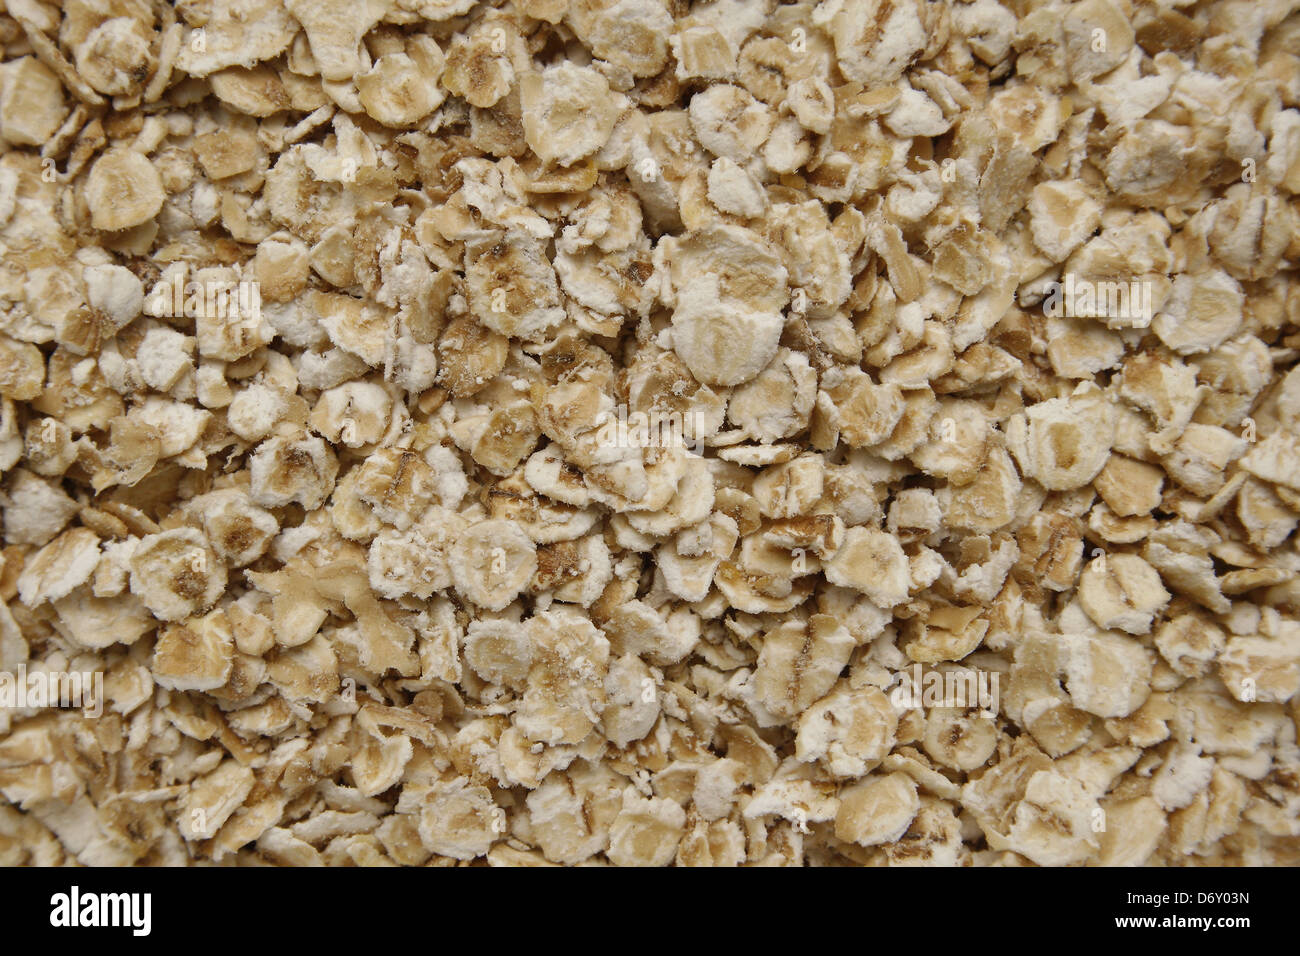 close up image of dry porridge oats Stock Photo